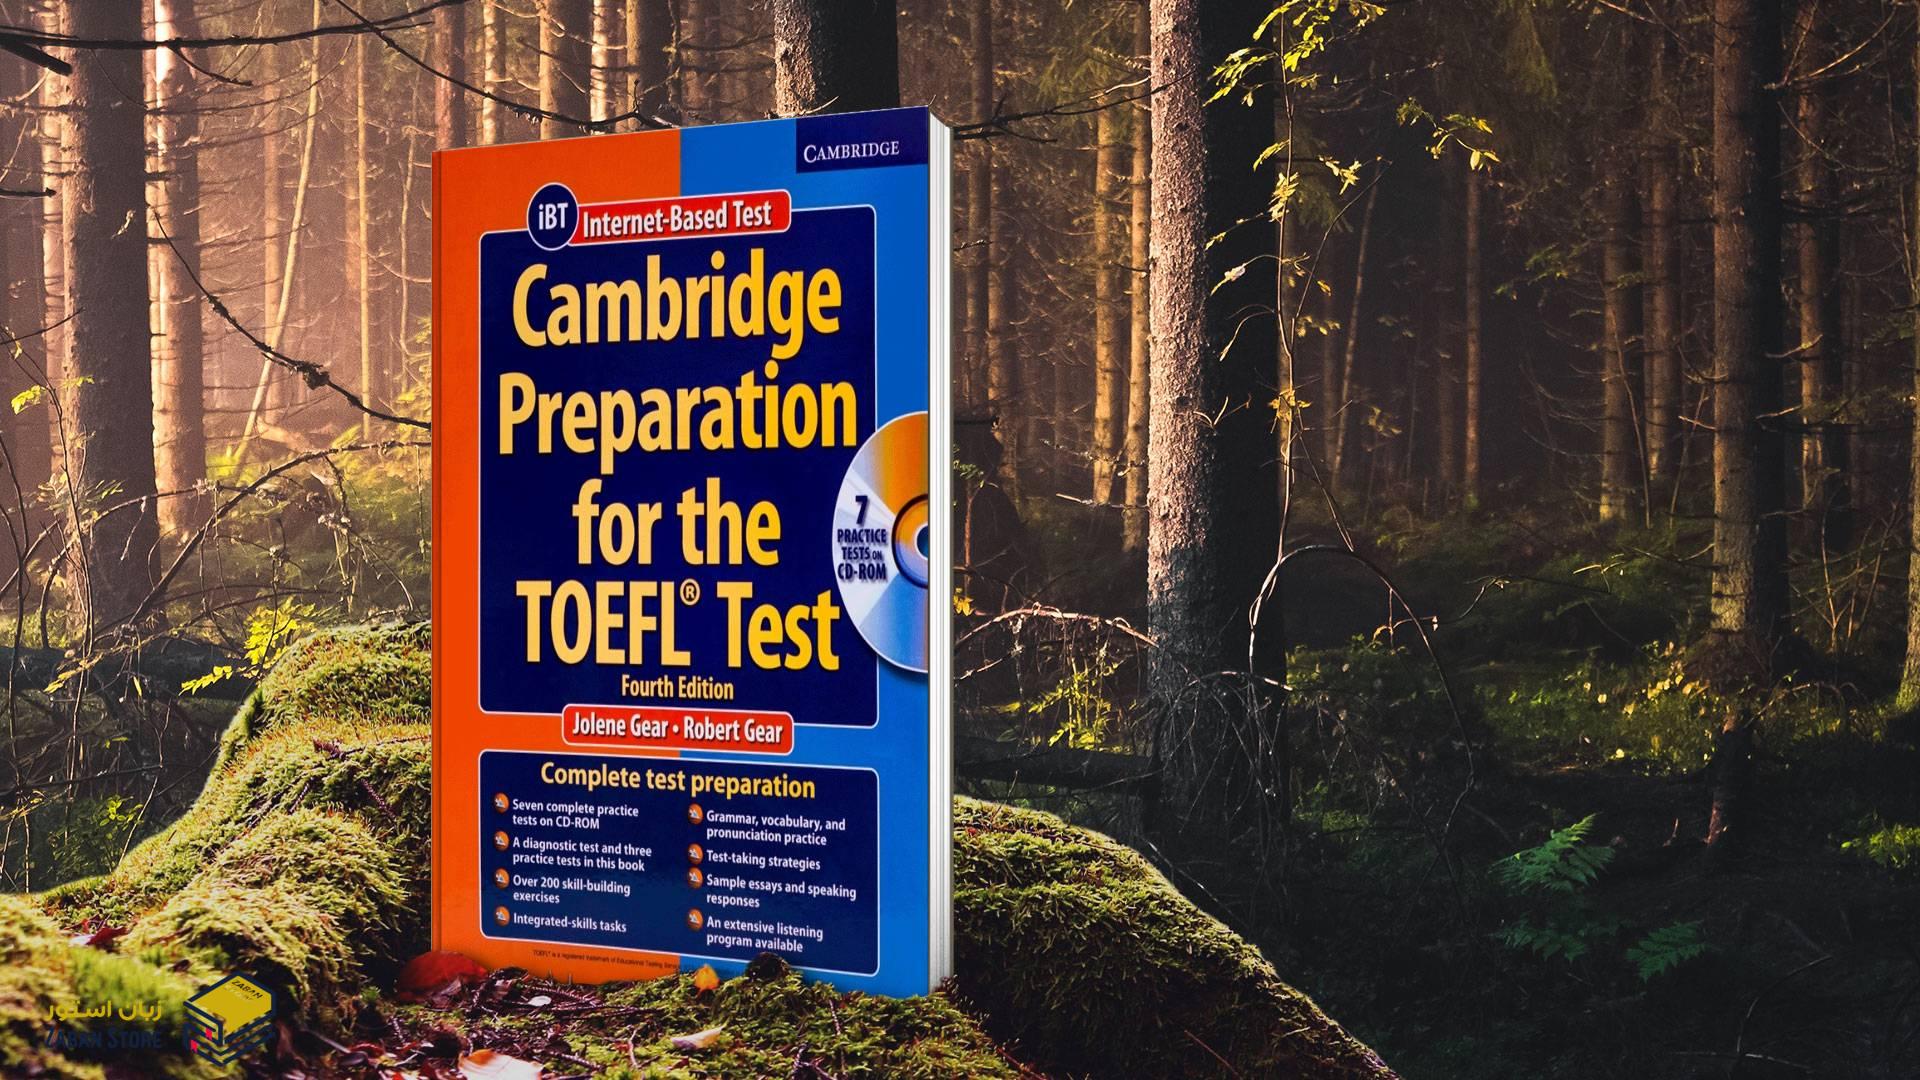 خرید کتاب آزمون تافل | Cambridge Preparation for the TOEFL test Fourth Edition | کمبريج پریپریشن تافل فور د تافل تست